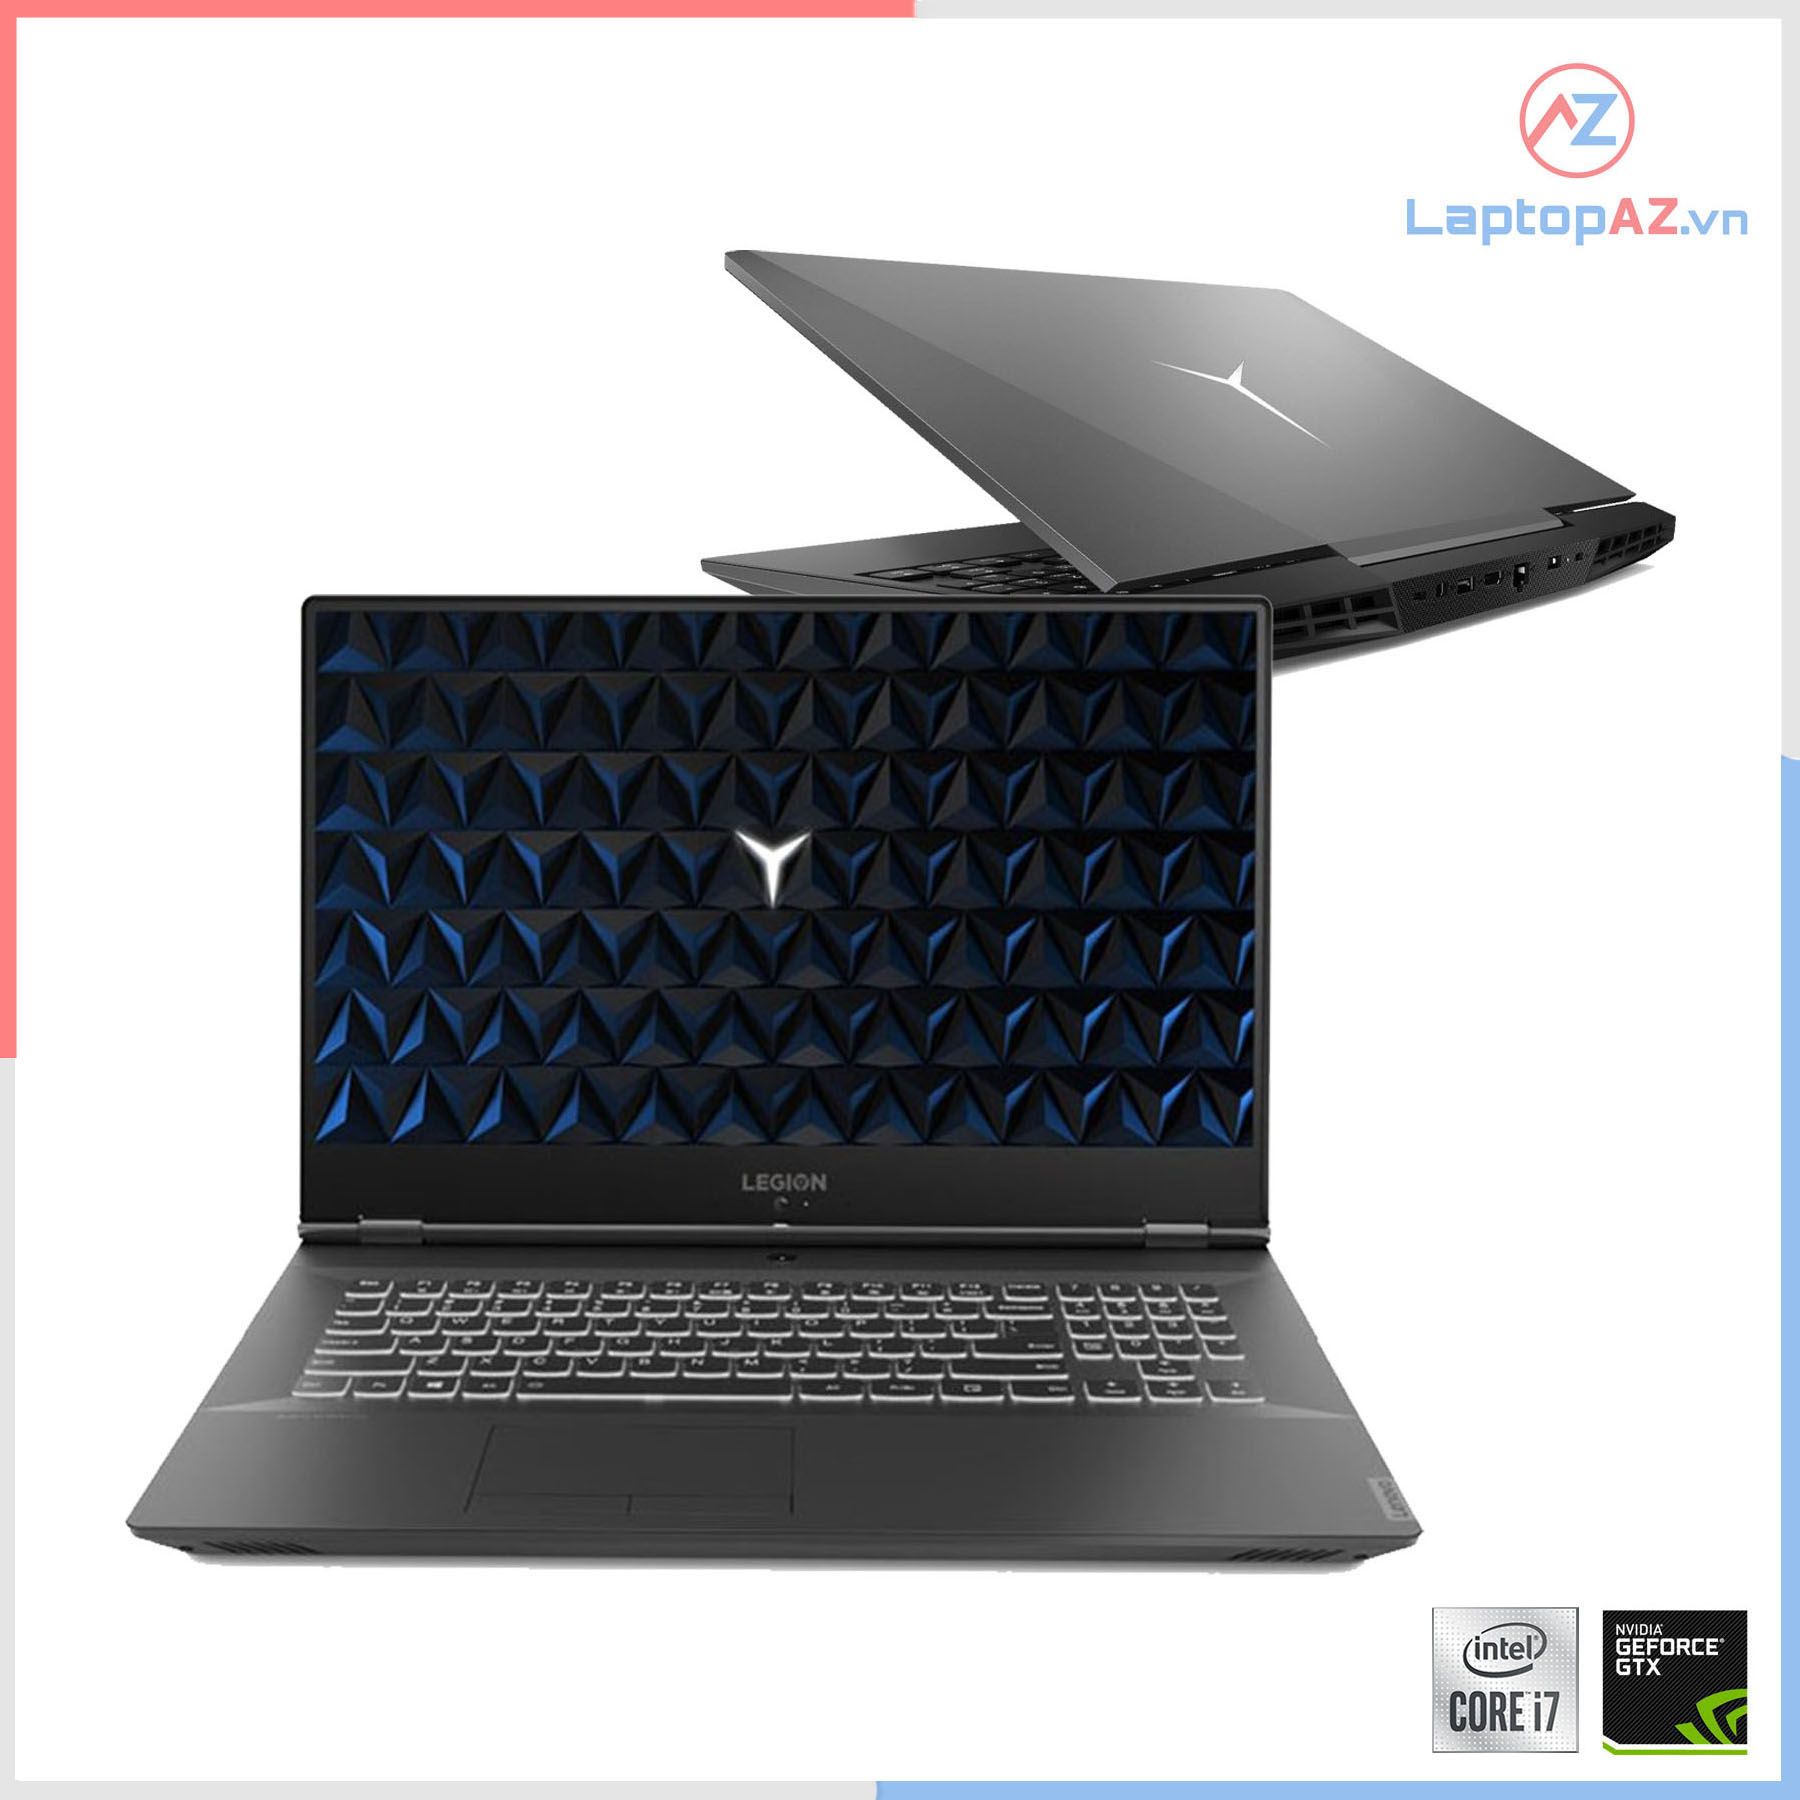 Laptop Lenovo Legion Y7000 (Core i7-8750H, 8GB, 512GB, VGA 6GB NVIDIA GTX 1060, 15.6 inch, FHD IPS)